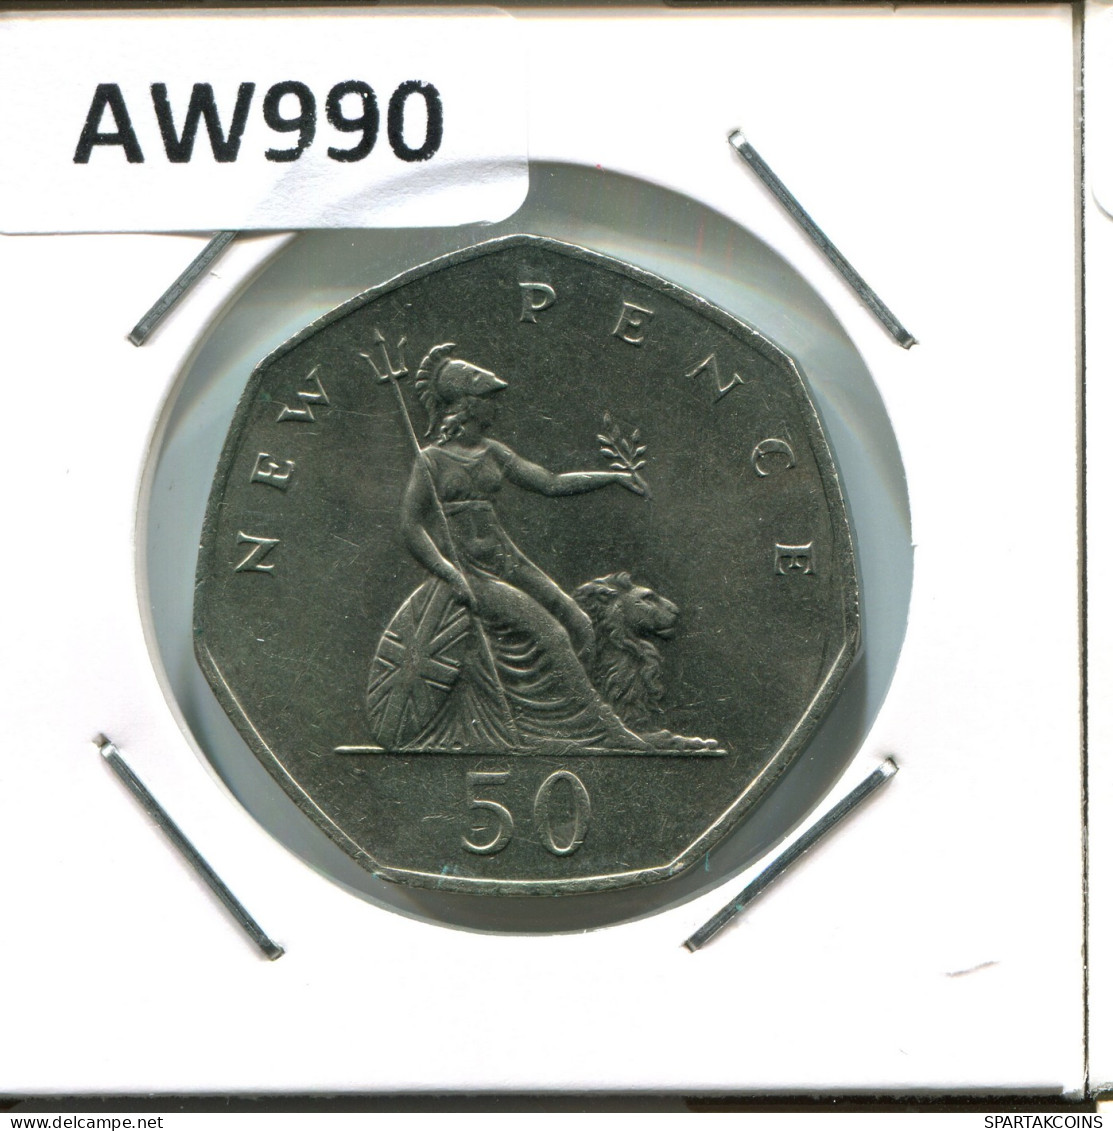 50 PENCE 1981 UK GROßBRITANNIEN GREAT BRITAIN Münze #AW990.D - 50 Pence